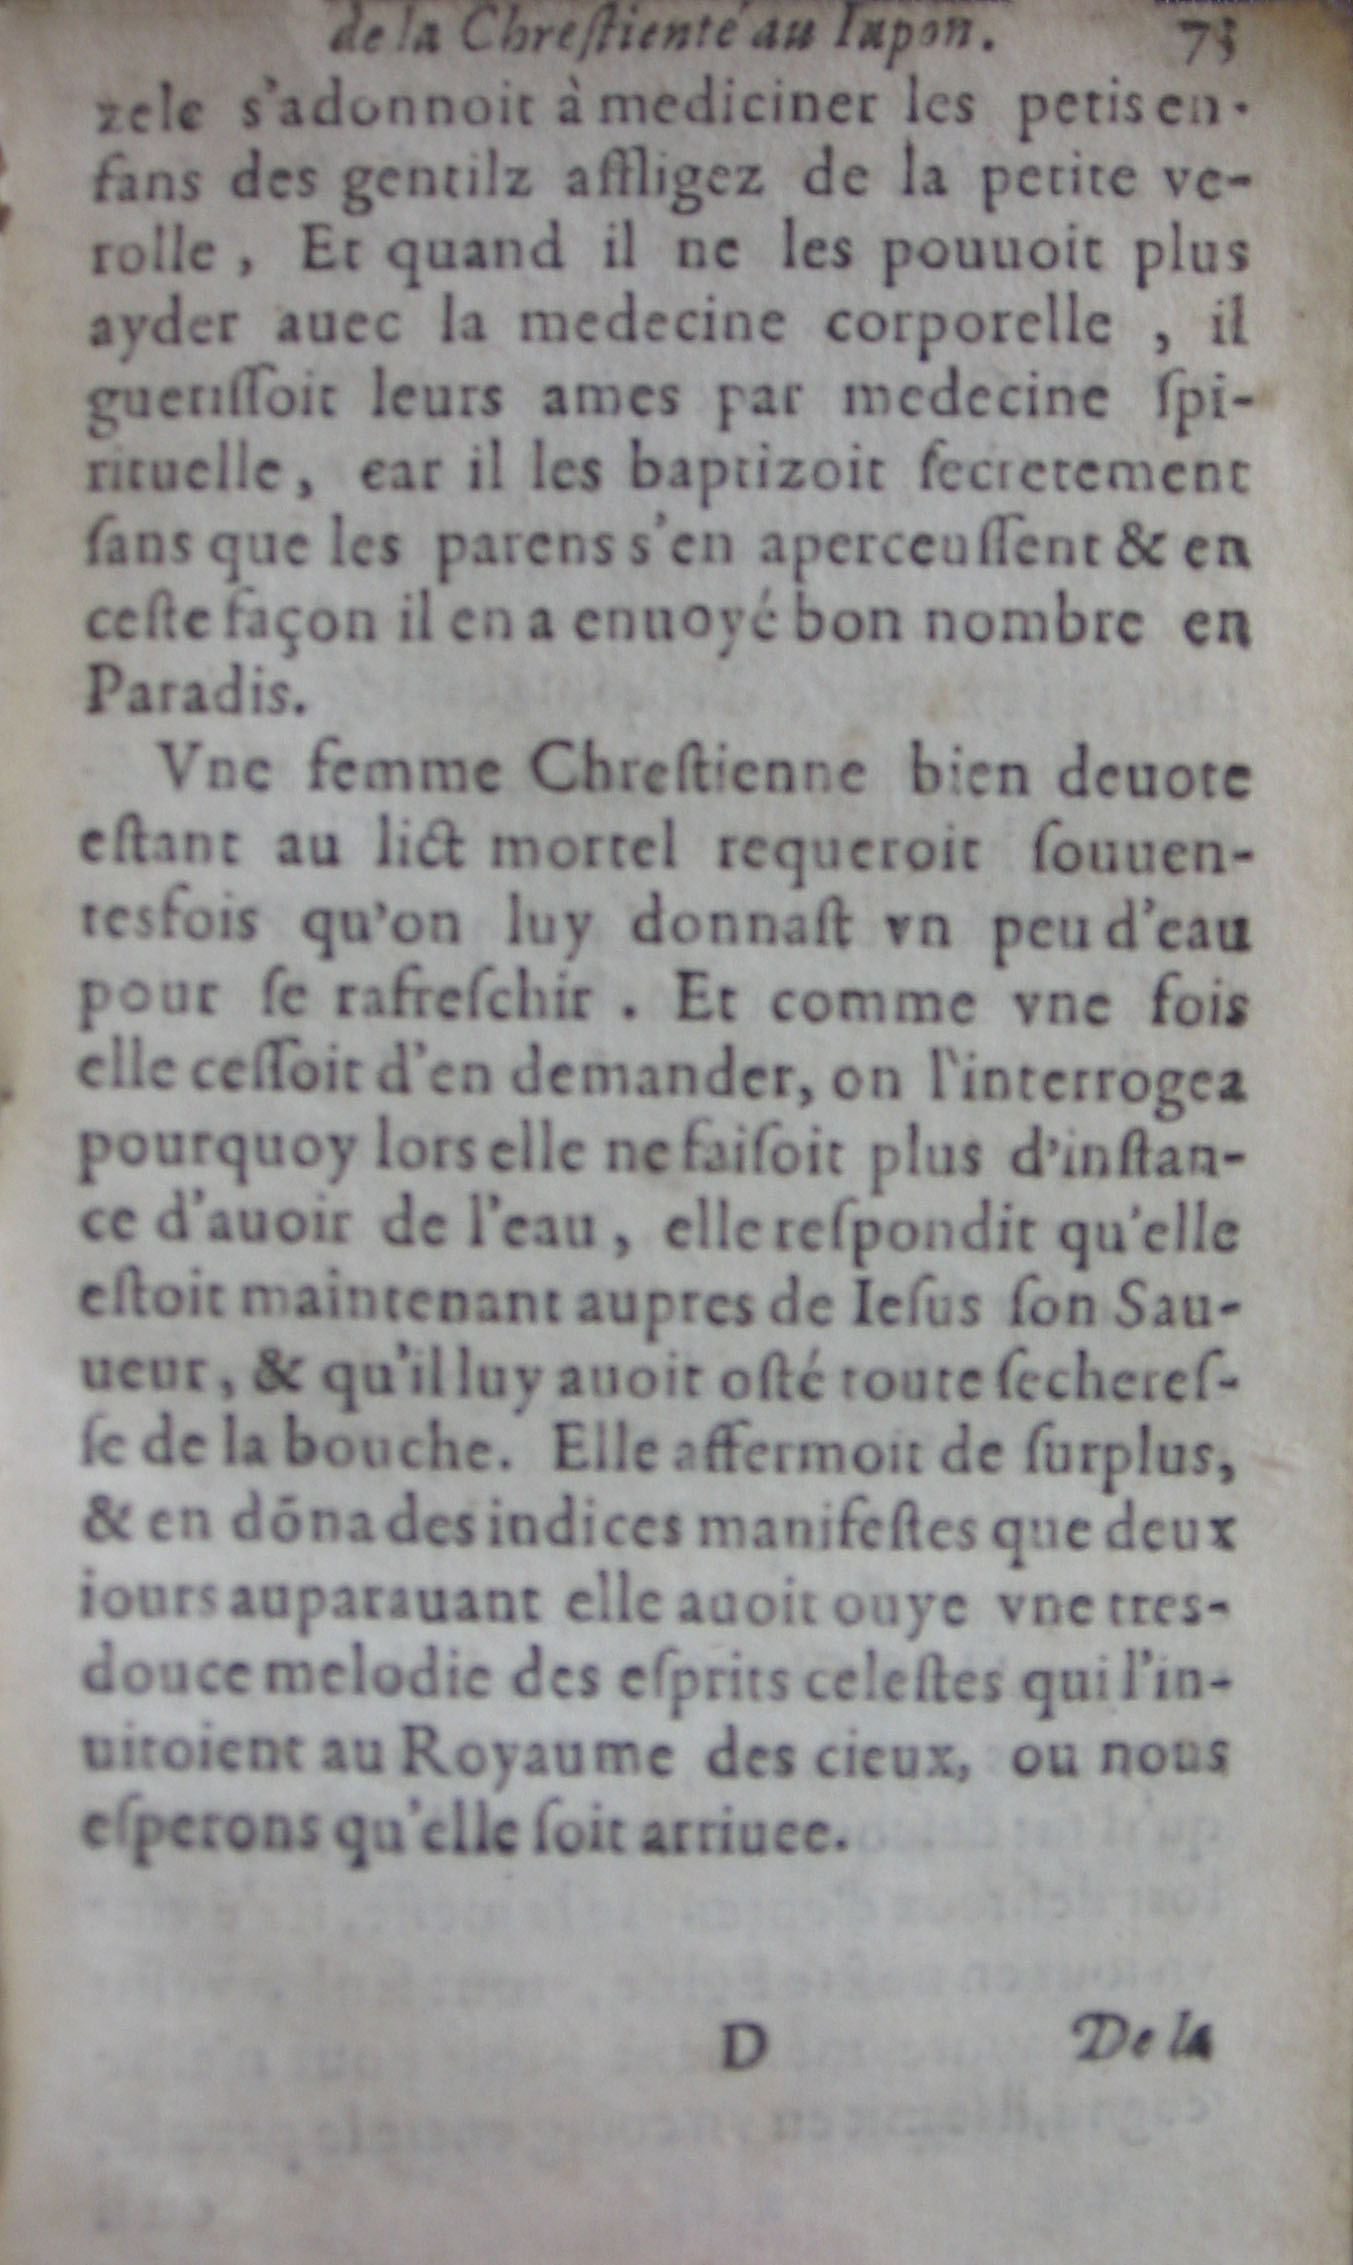 p. 73.JPG